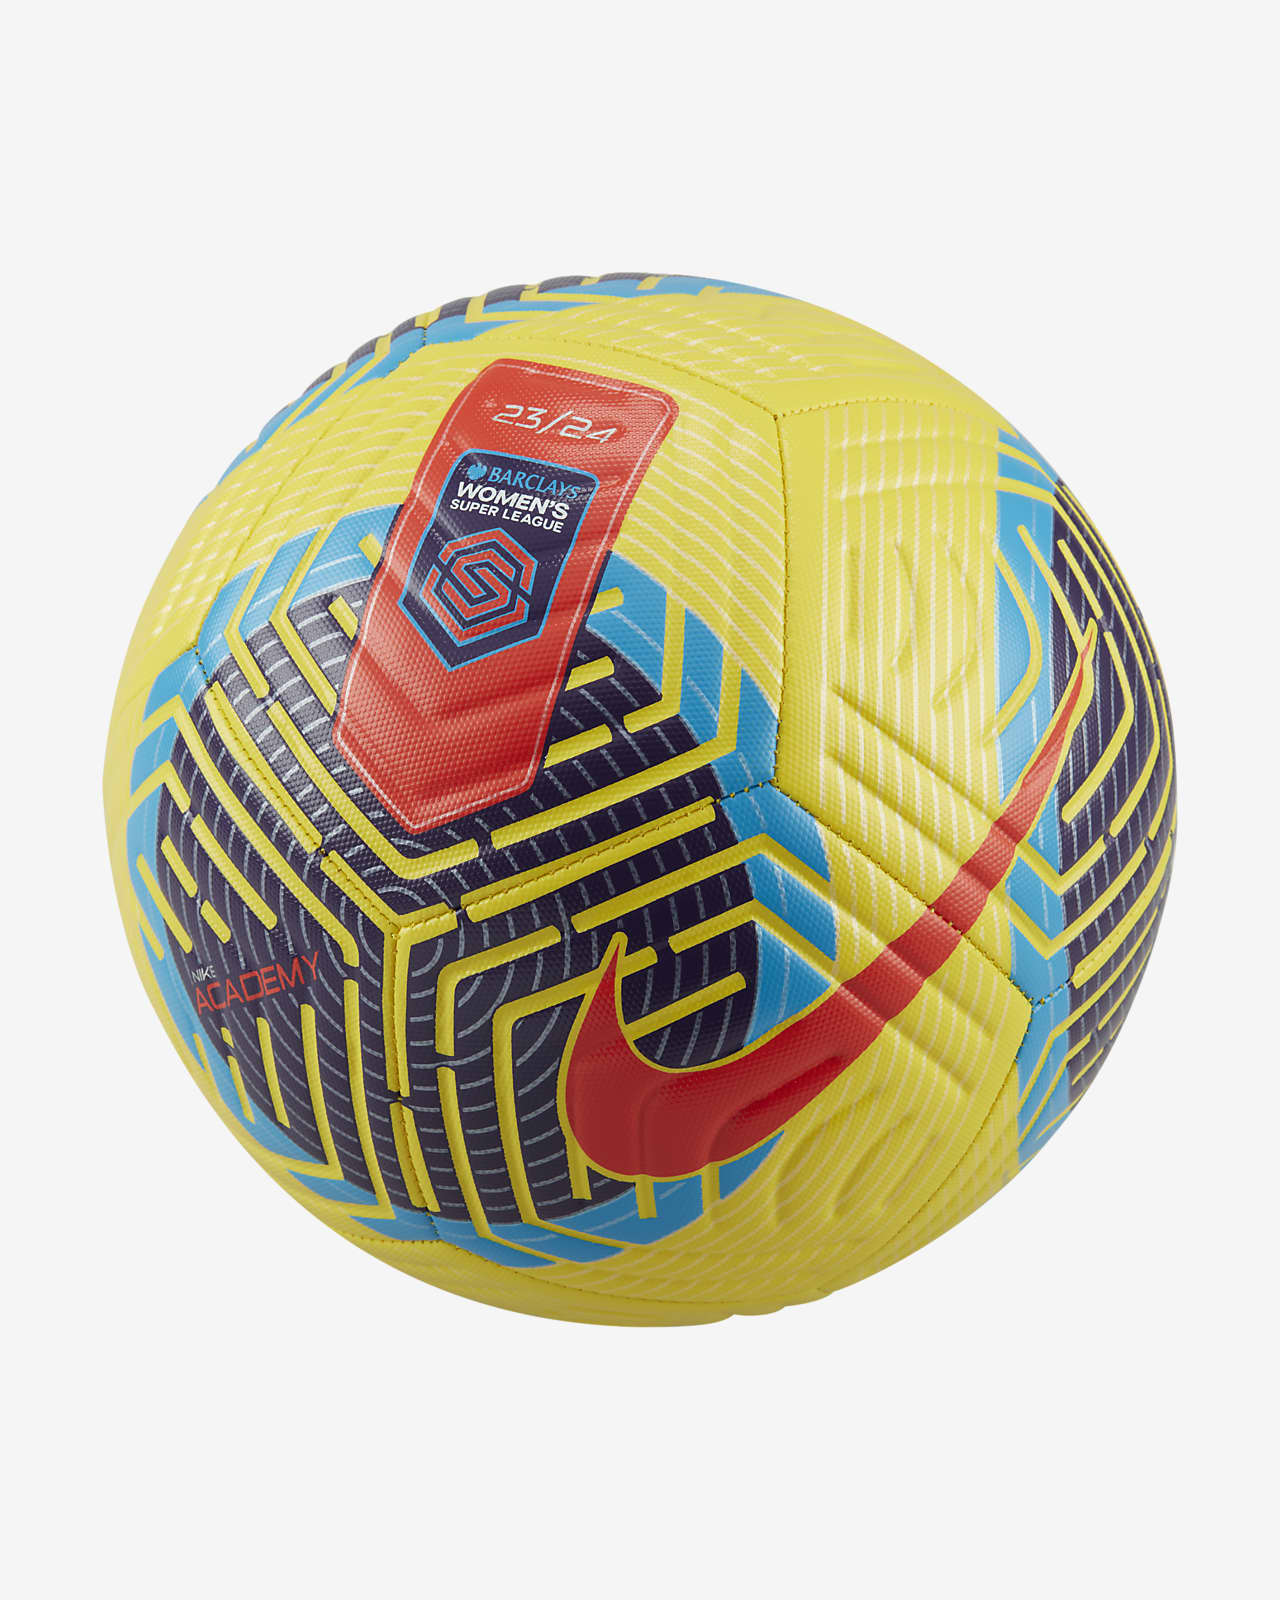 Ballon de foot Super League Academy féminine